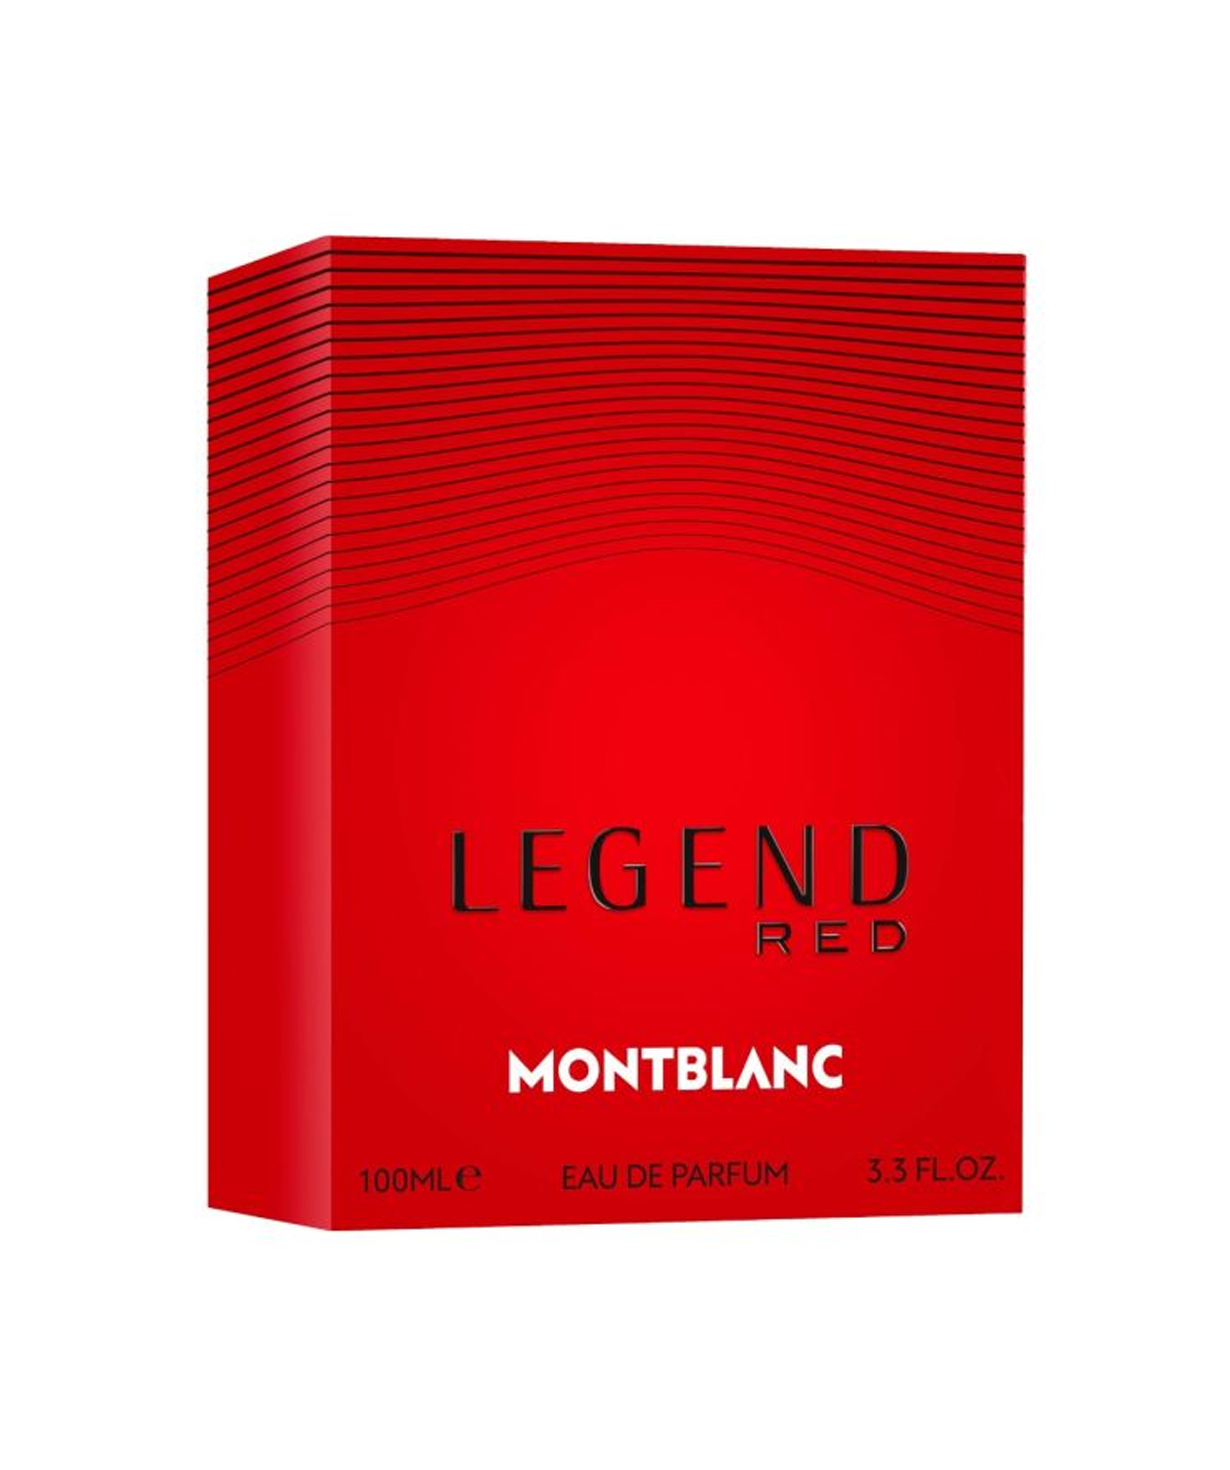 Perfume «Montblanc» Legend Red, for men, 100 ml